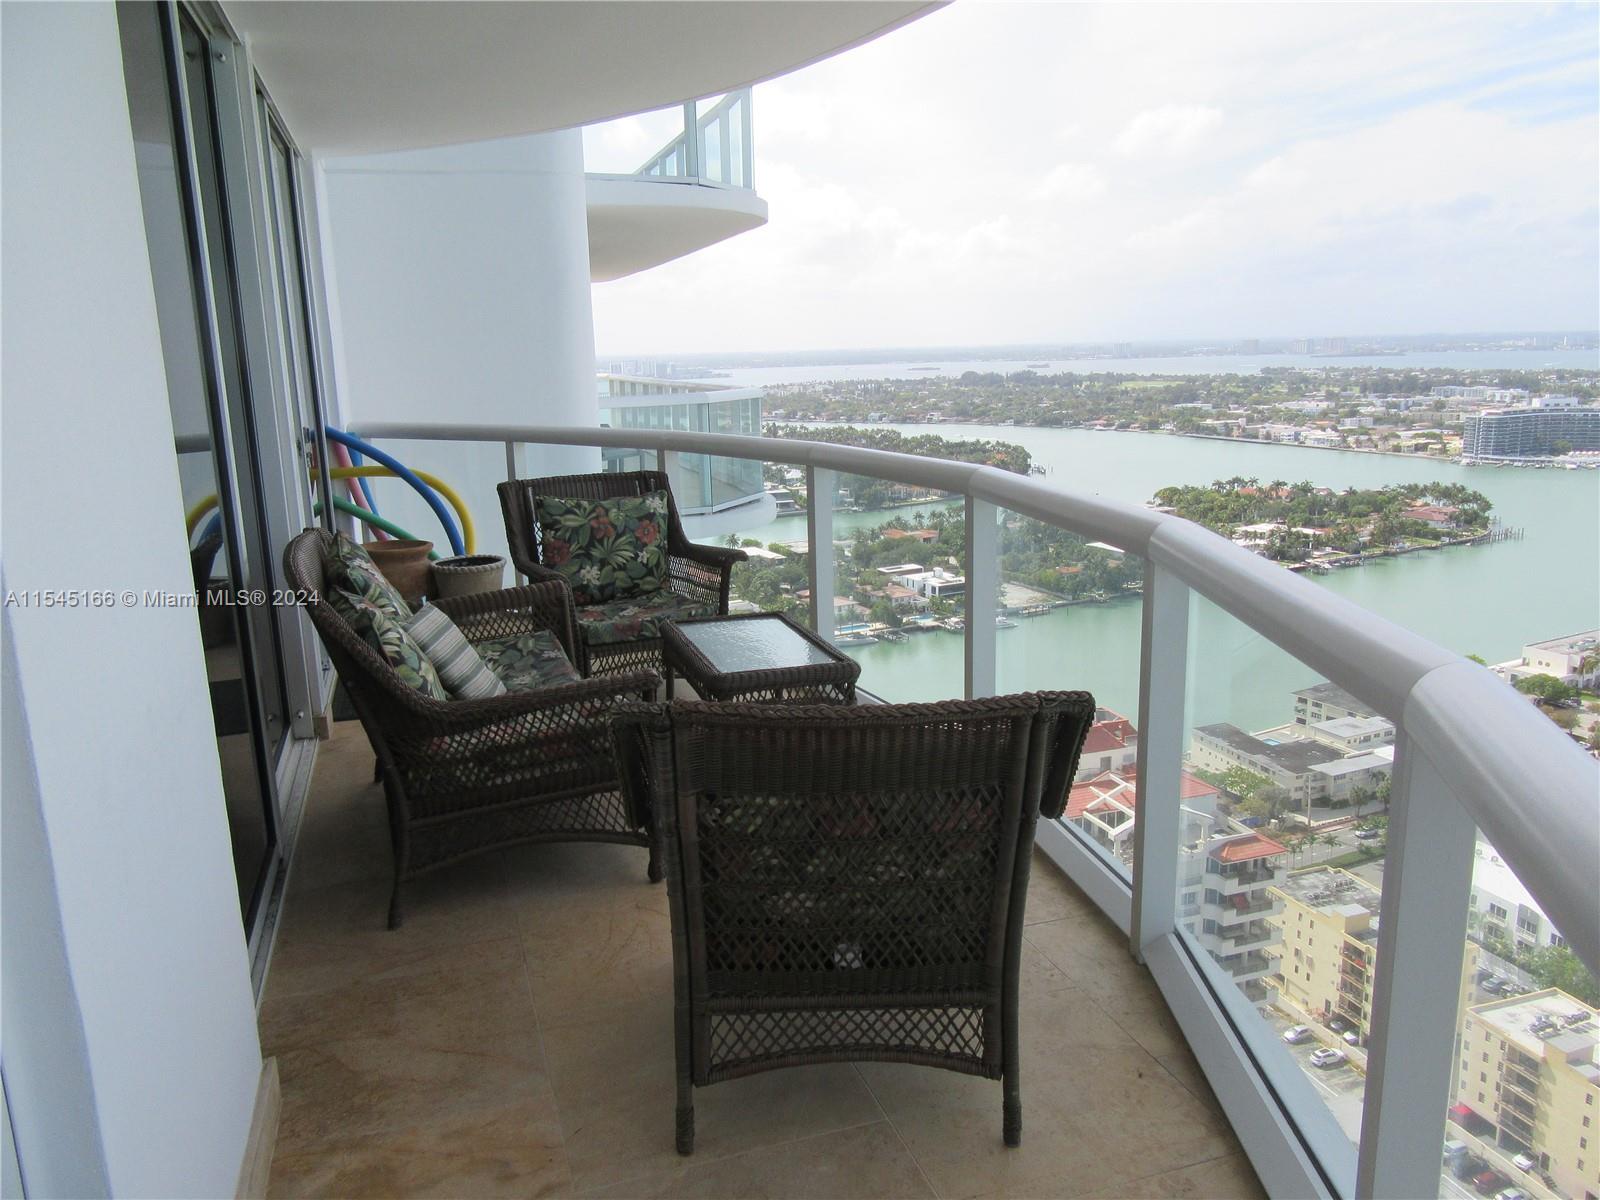 Rental Property at 6365 Collins Ave 3509, Miami Beach, Miami-Dade County, Florida - Bedrooms: 2 
Bathrooms: 2  - $5,000 MO.